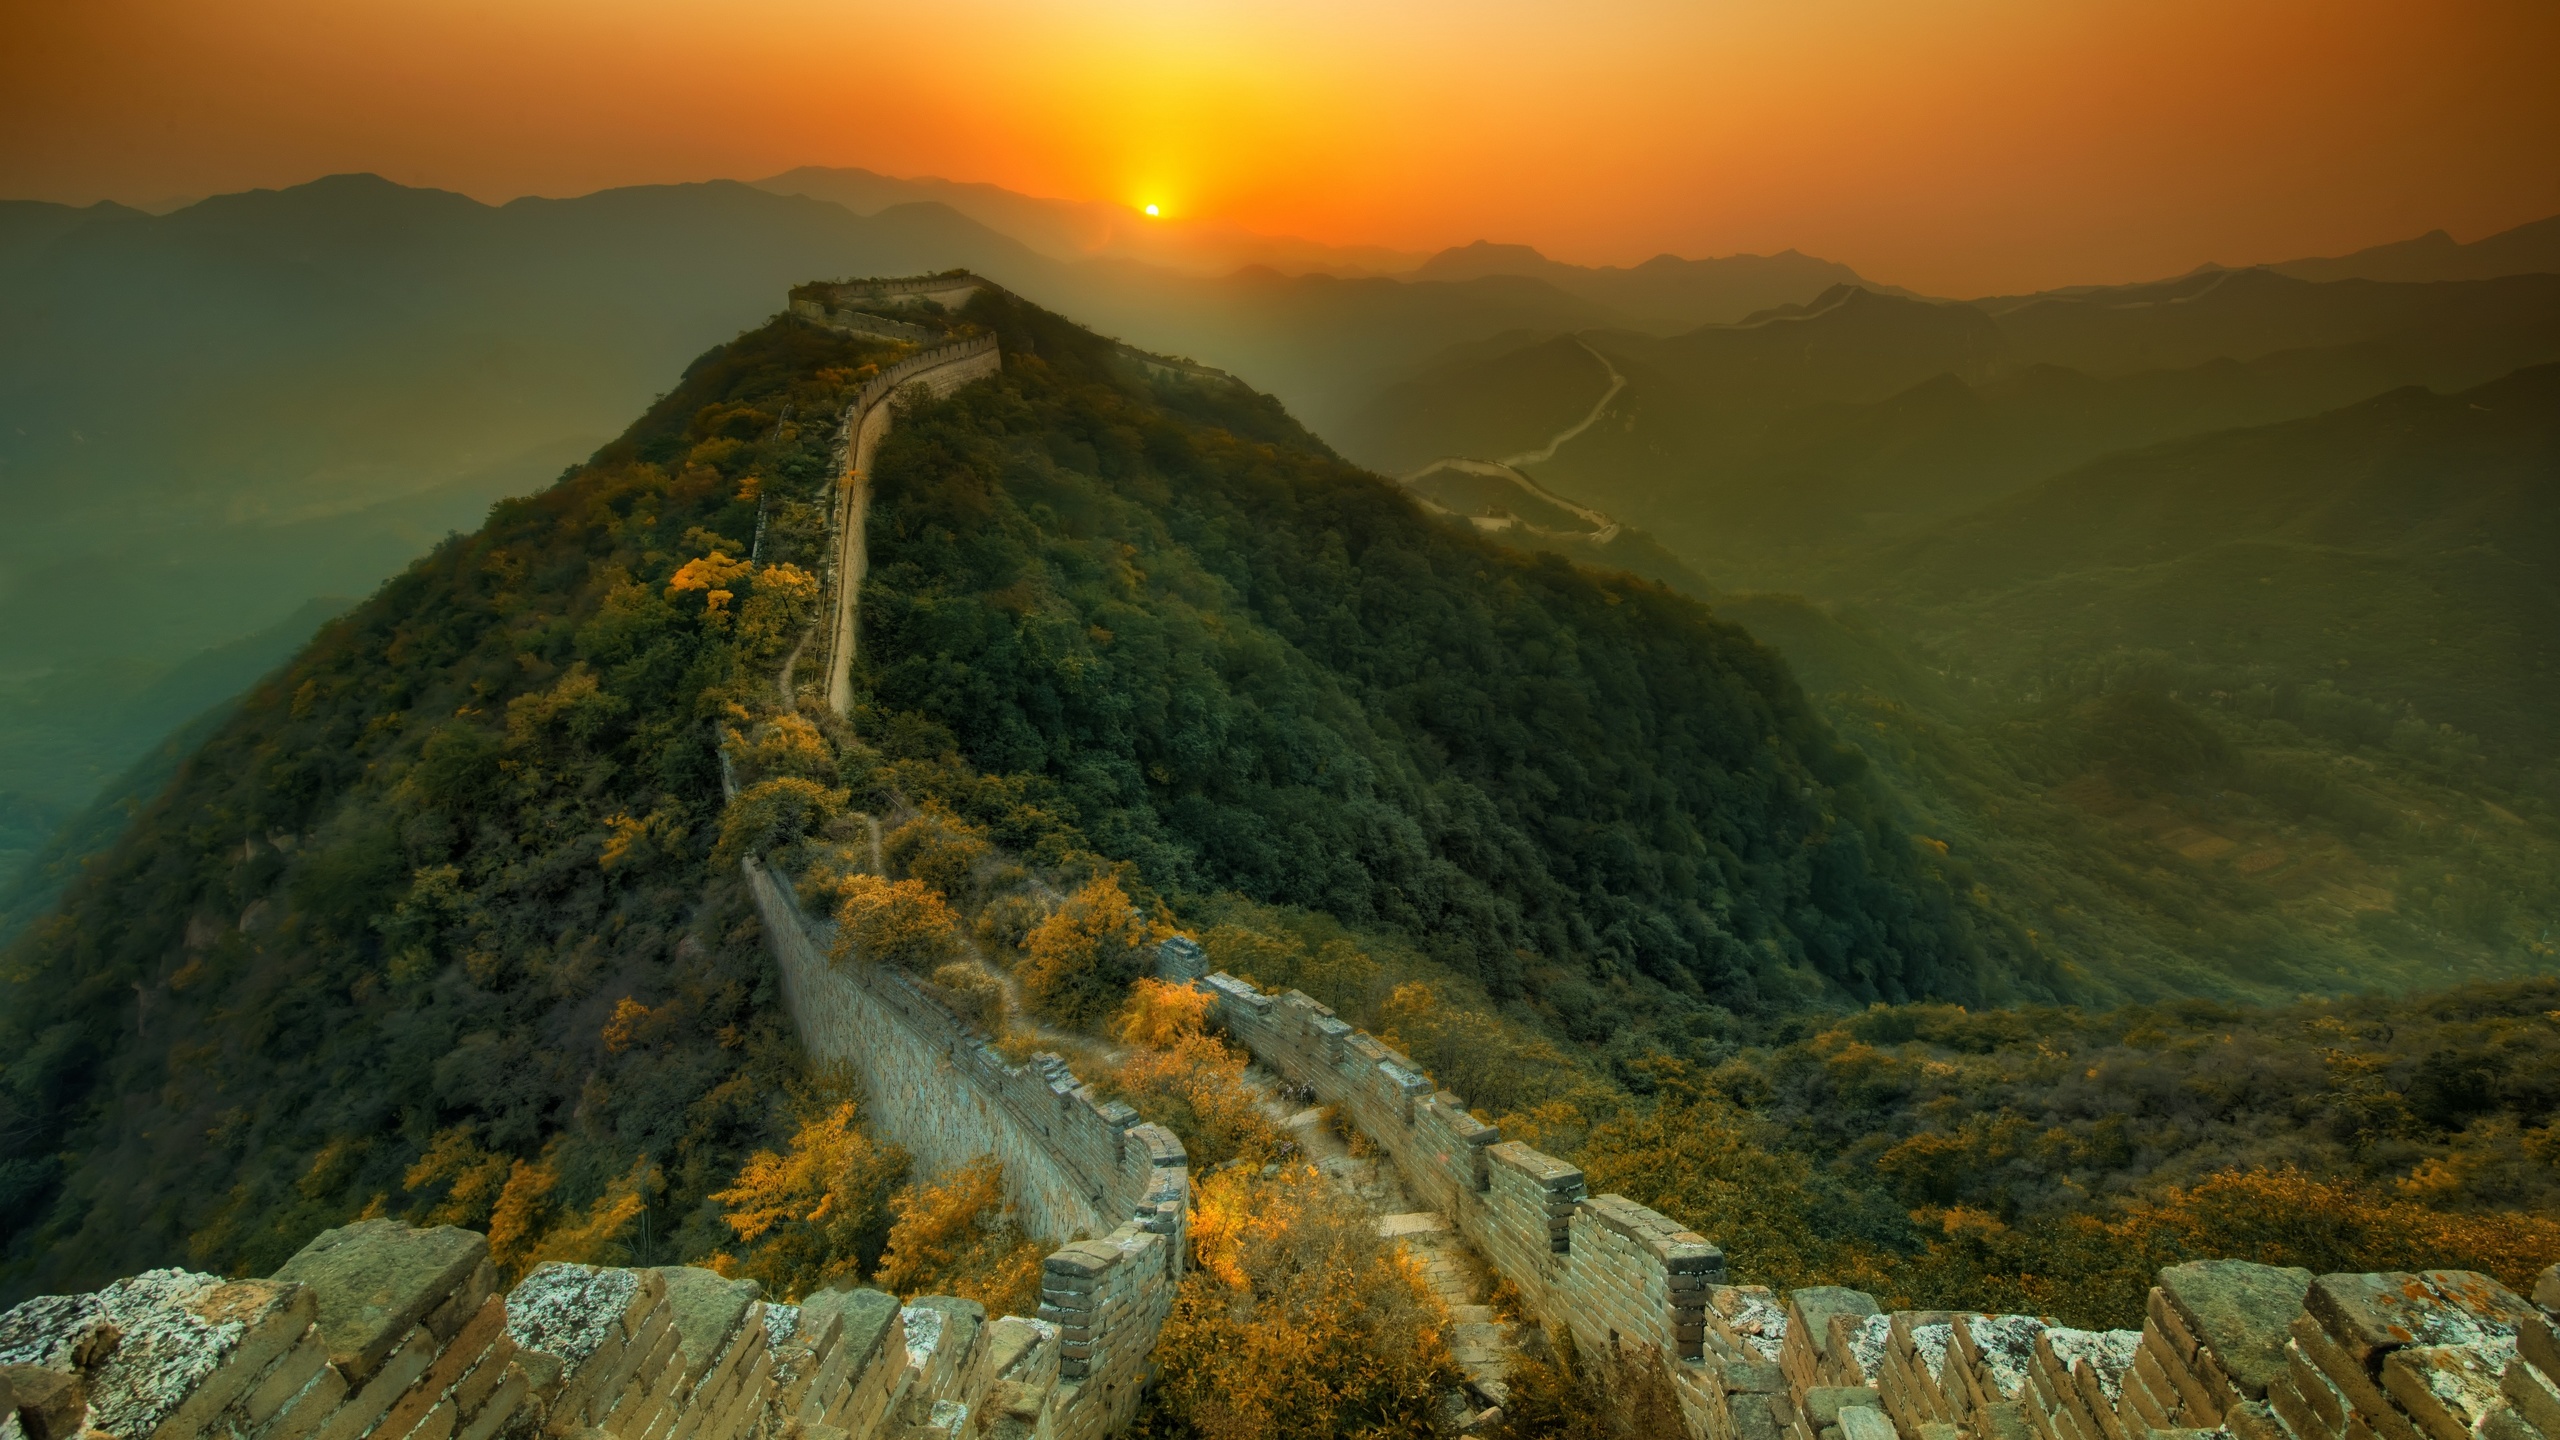 Grande muraille de Chine - coucher de soleil